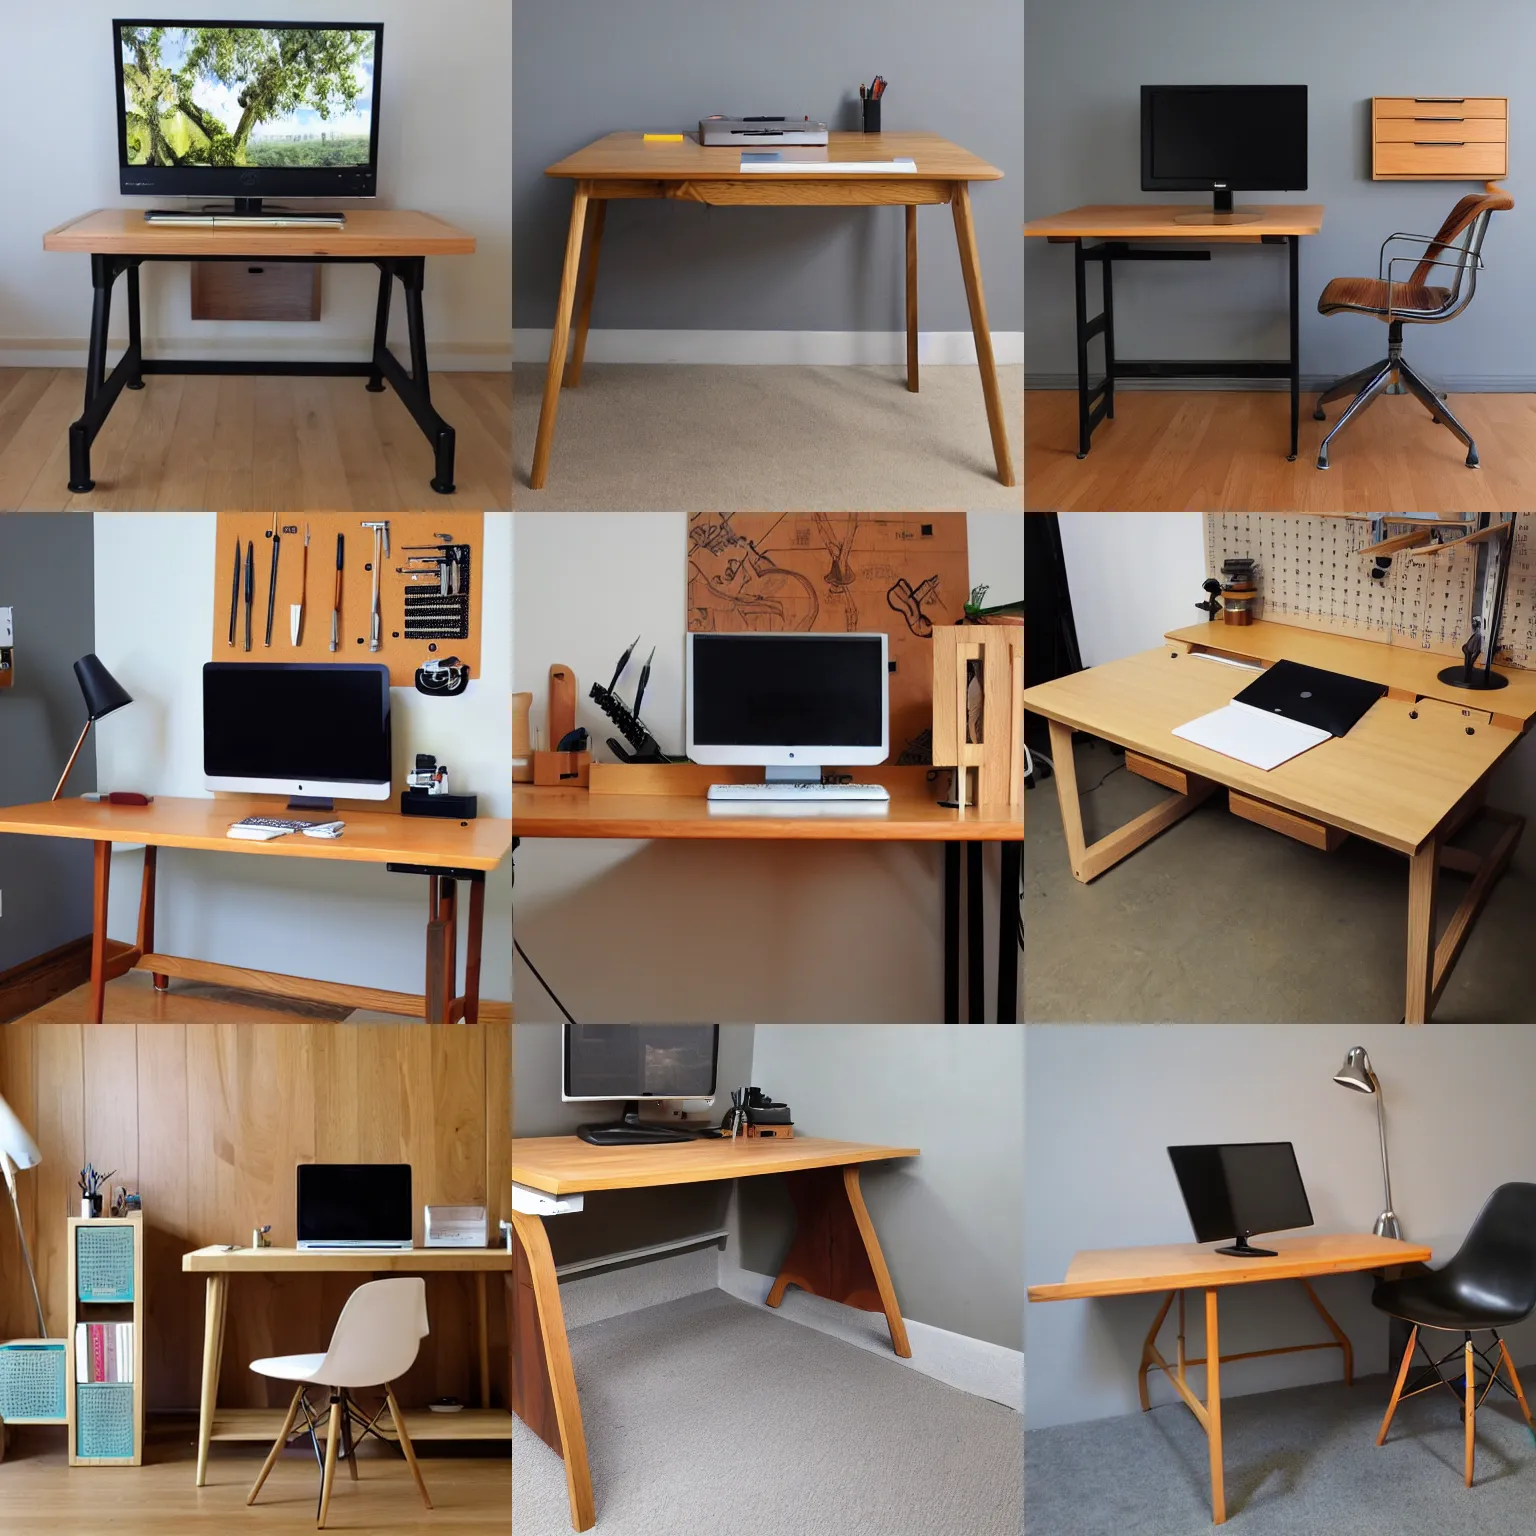 Prompt: desktop oak wood, eames chair design, 3 2 inch monitor, notebook, workbench, storage, tools